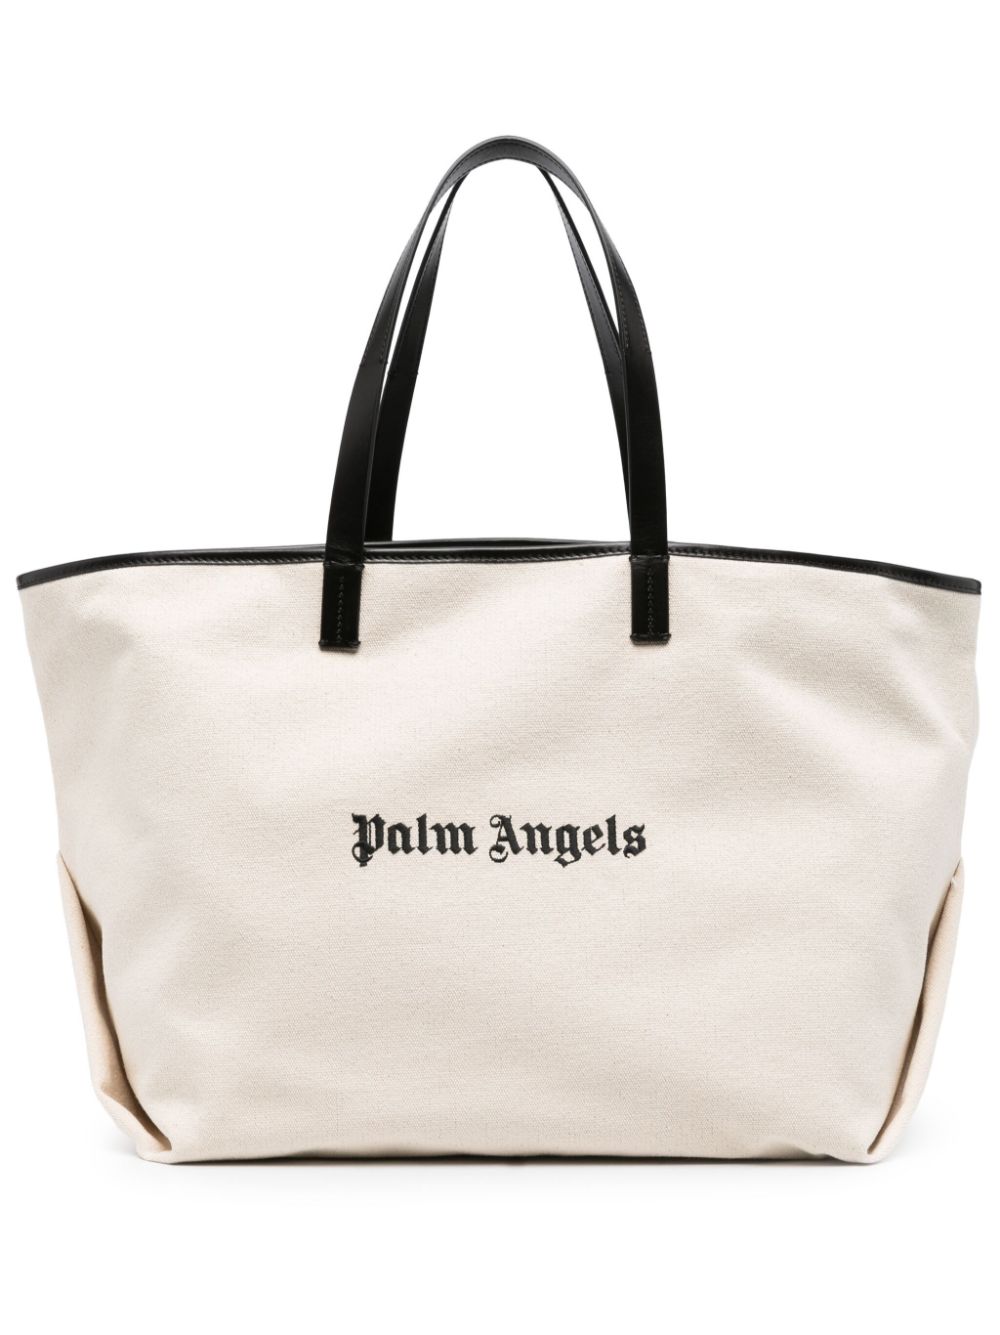 PALM ANGELS WOMEN Classic Logo Tote Bag Off White/Black - MAISONDEFASHION.COM